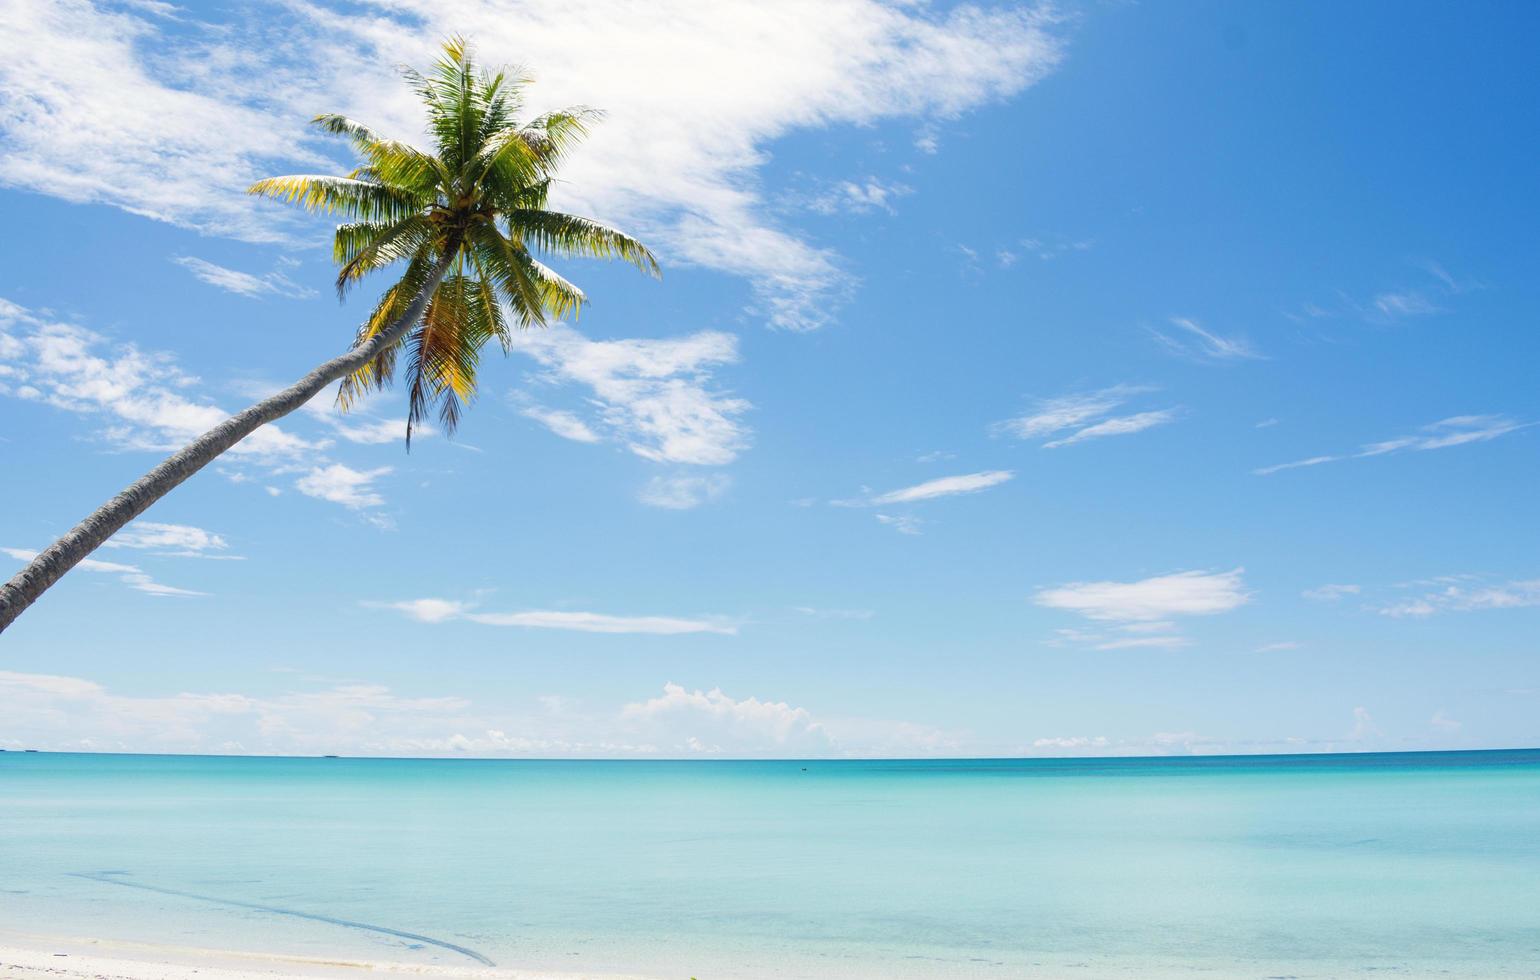 the minimalist coconut tree at the beach photo